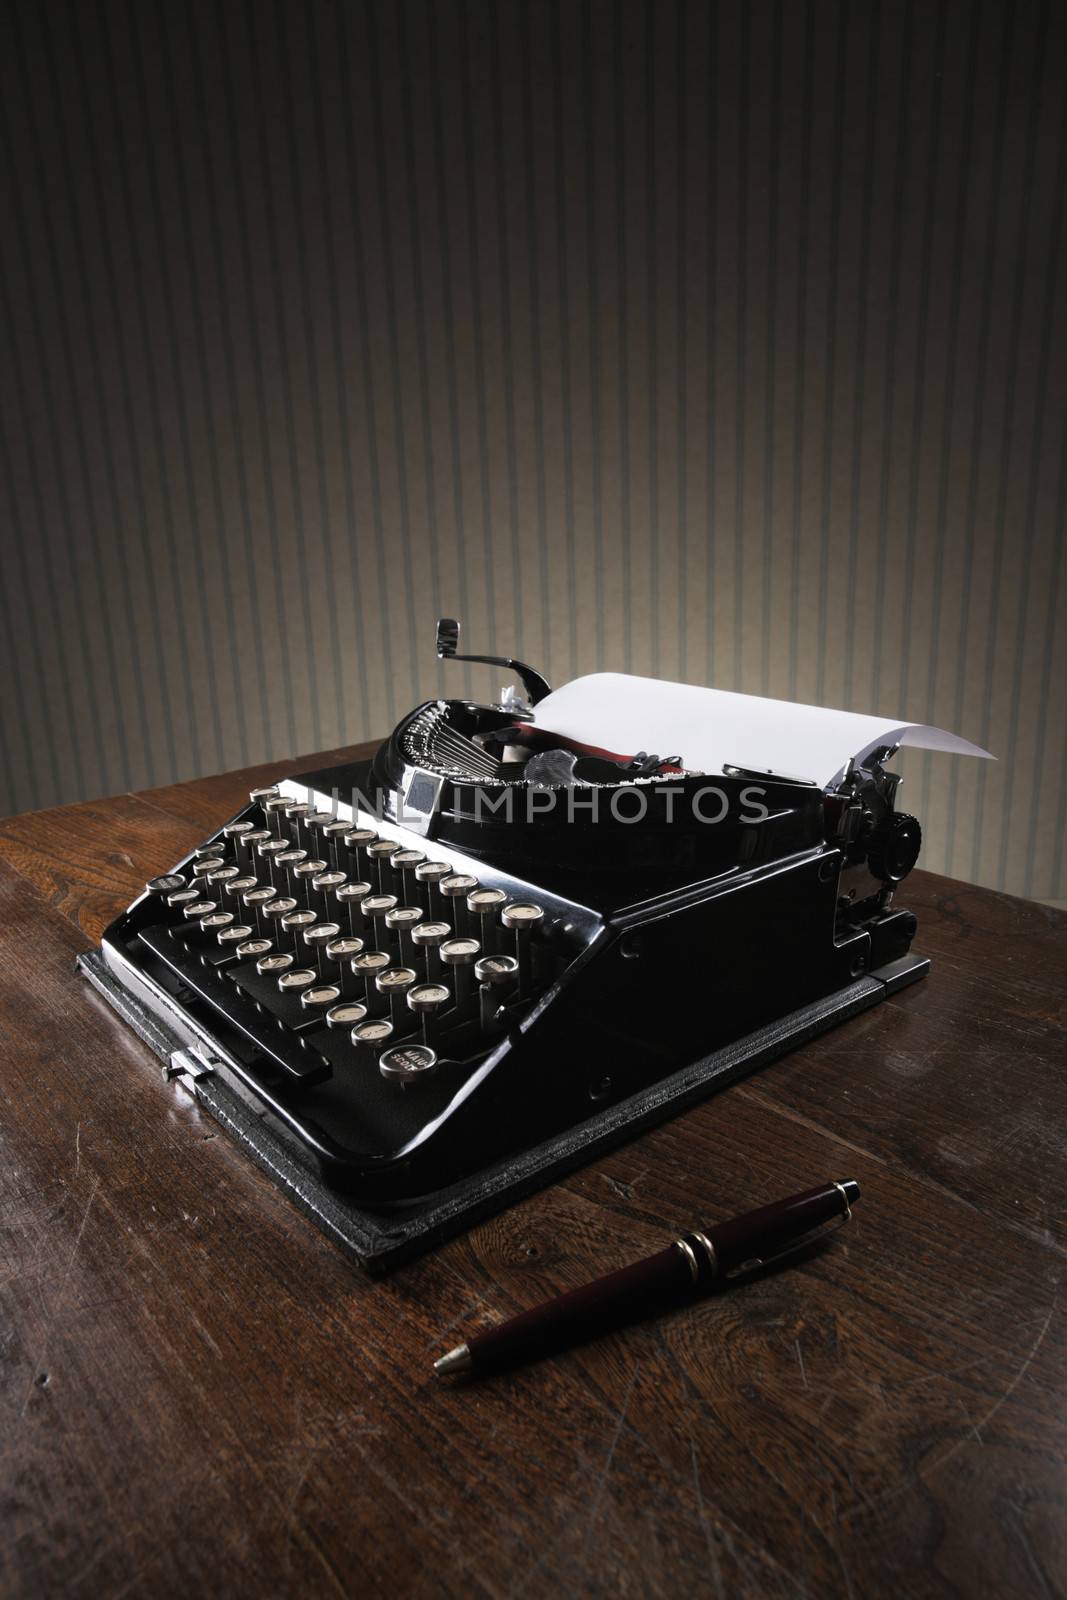 Old typewriter on a wooden desk